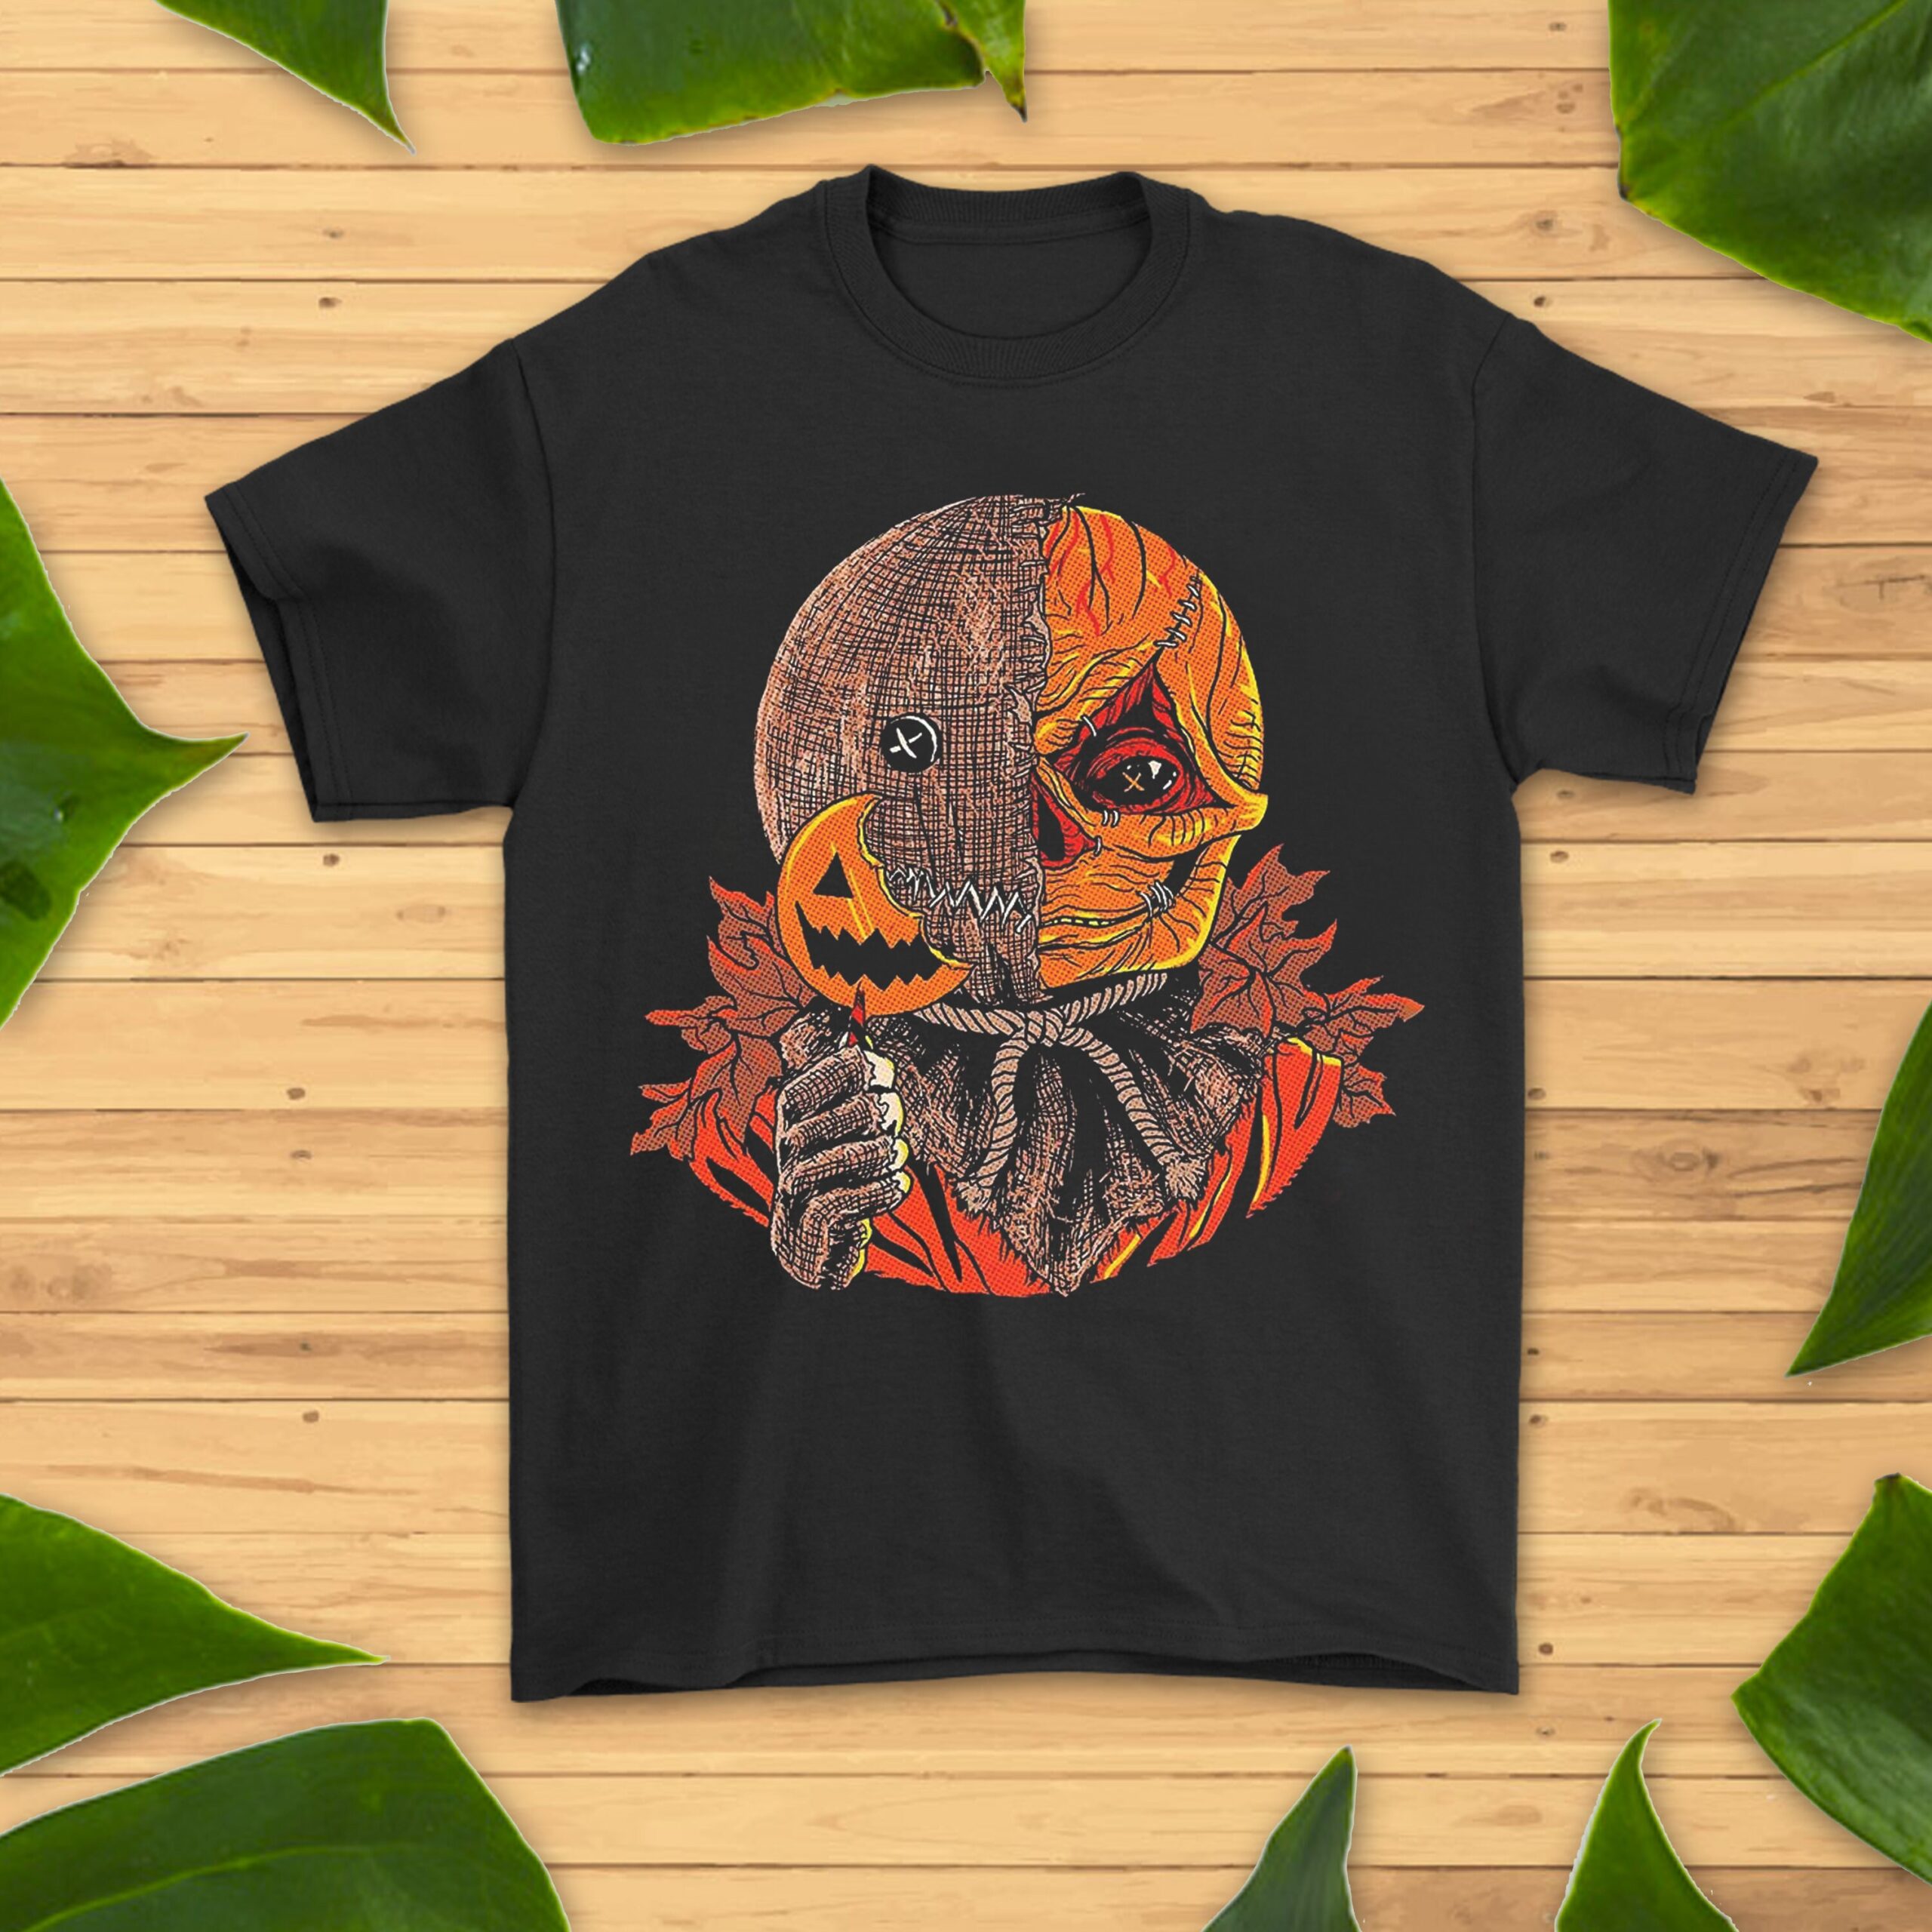 SAM Trick Or Treat Pumpkin Halloween Shirt